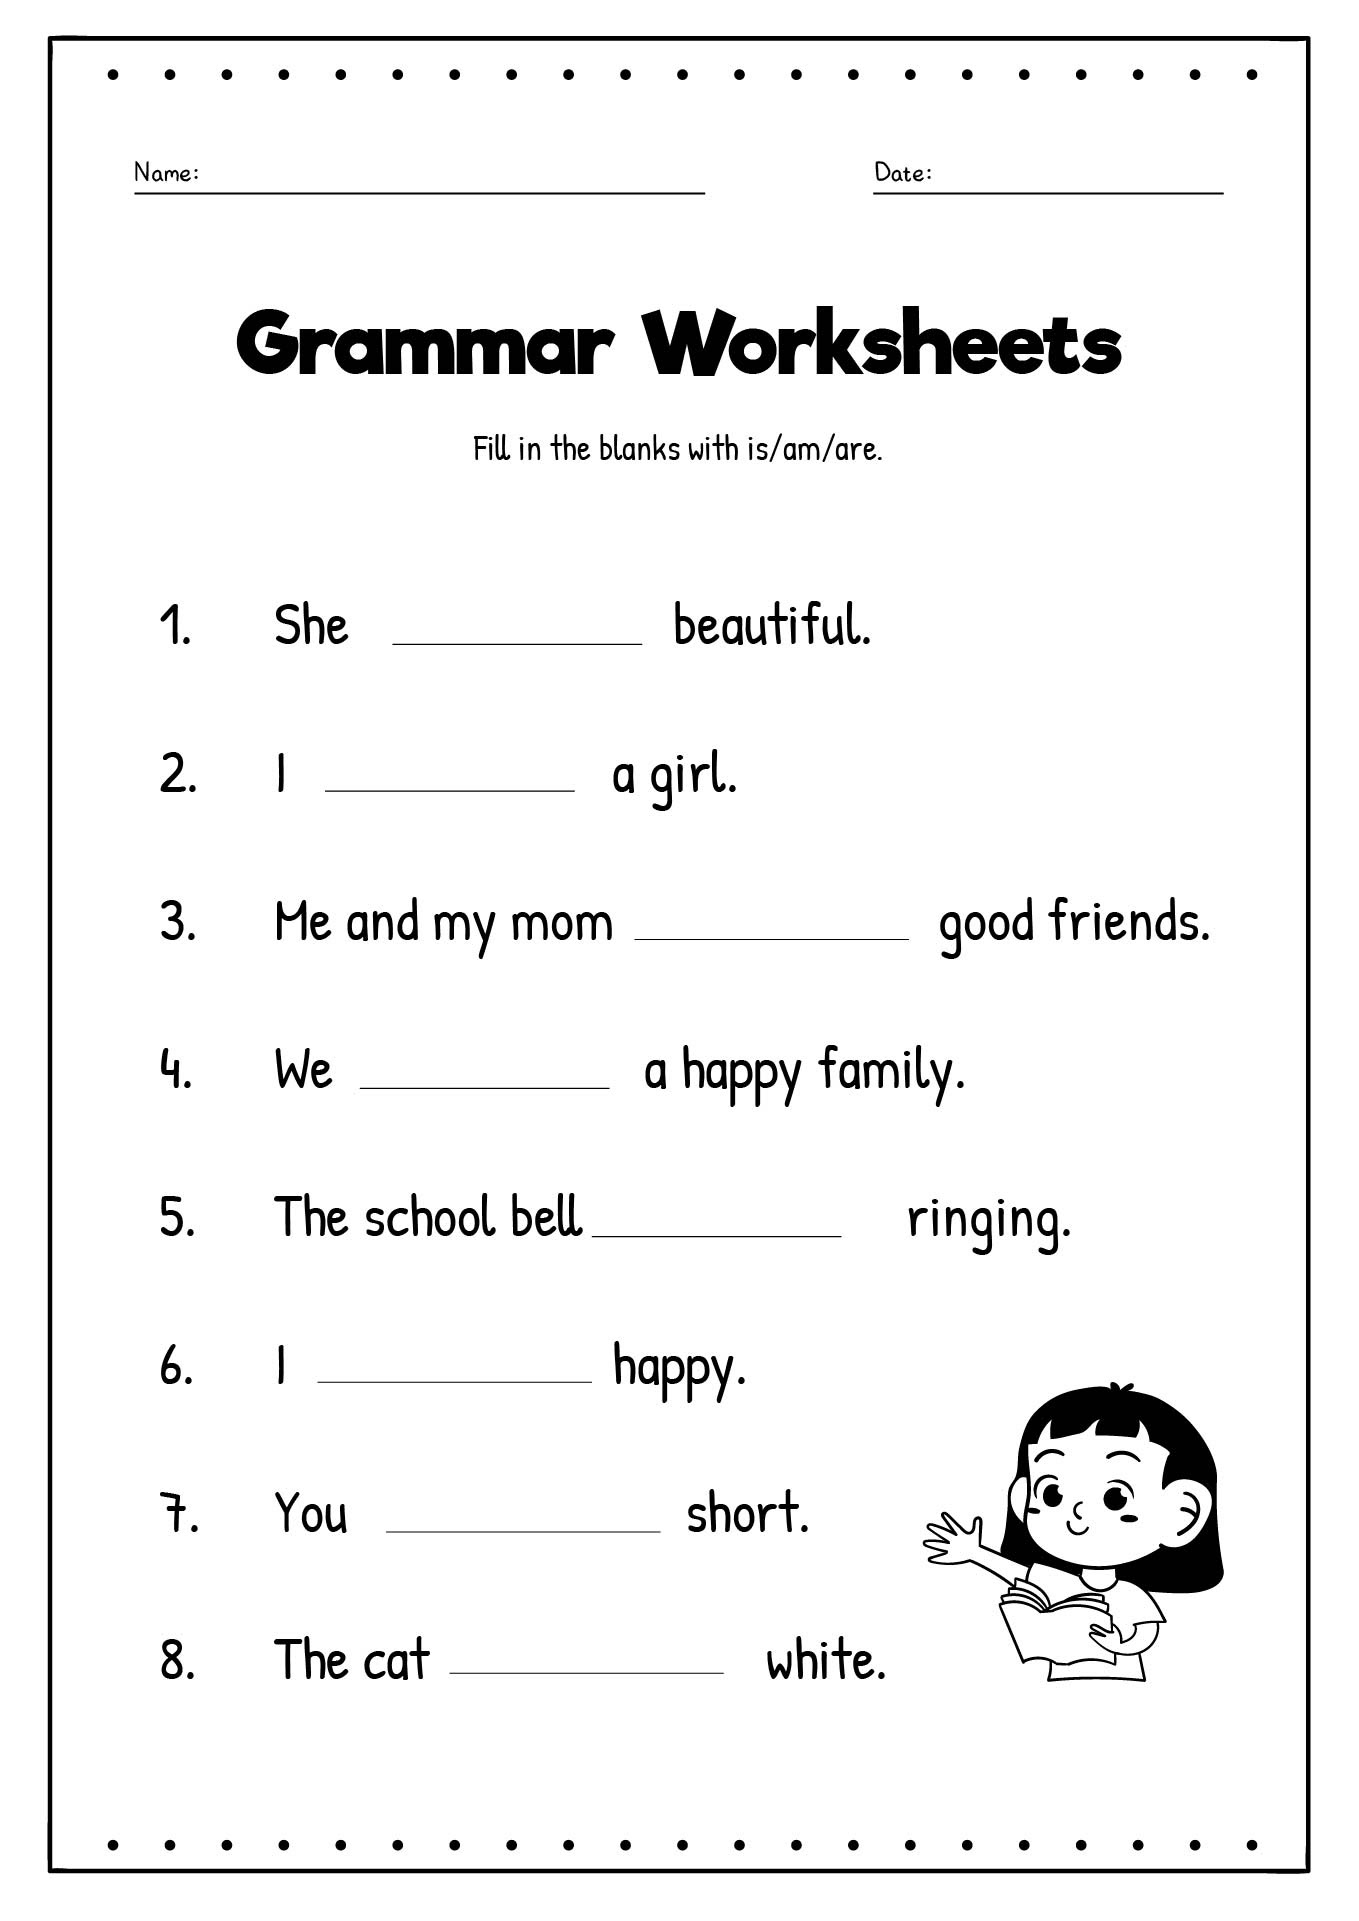 english-grammar-free-printable-worksheets-free-printable-templates